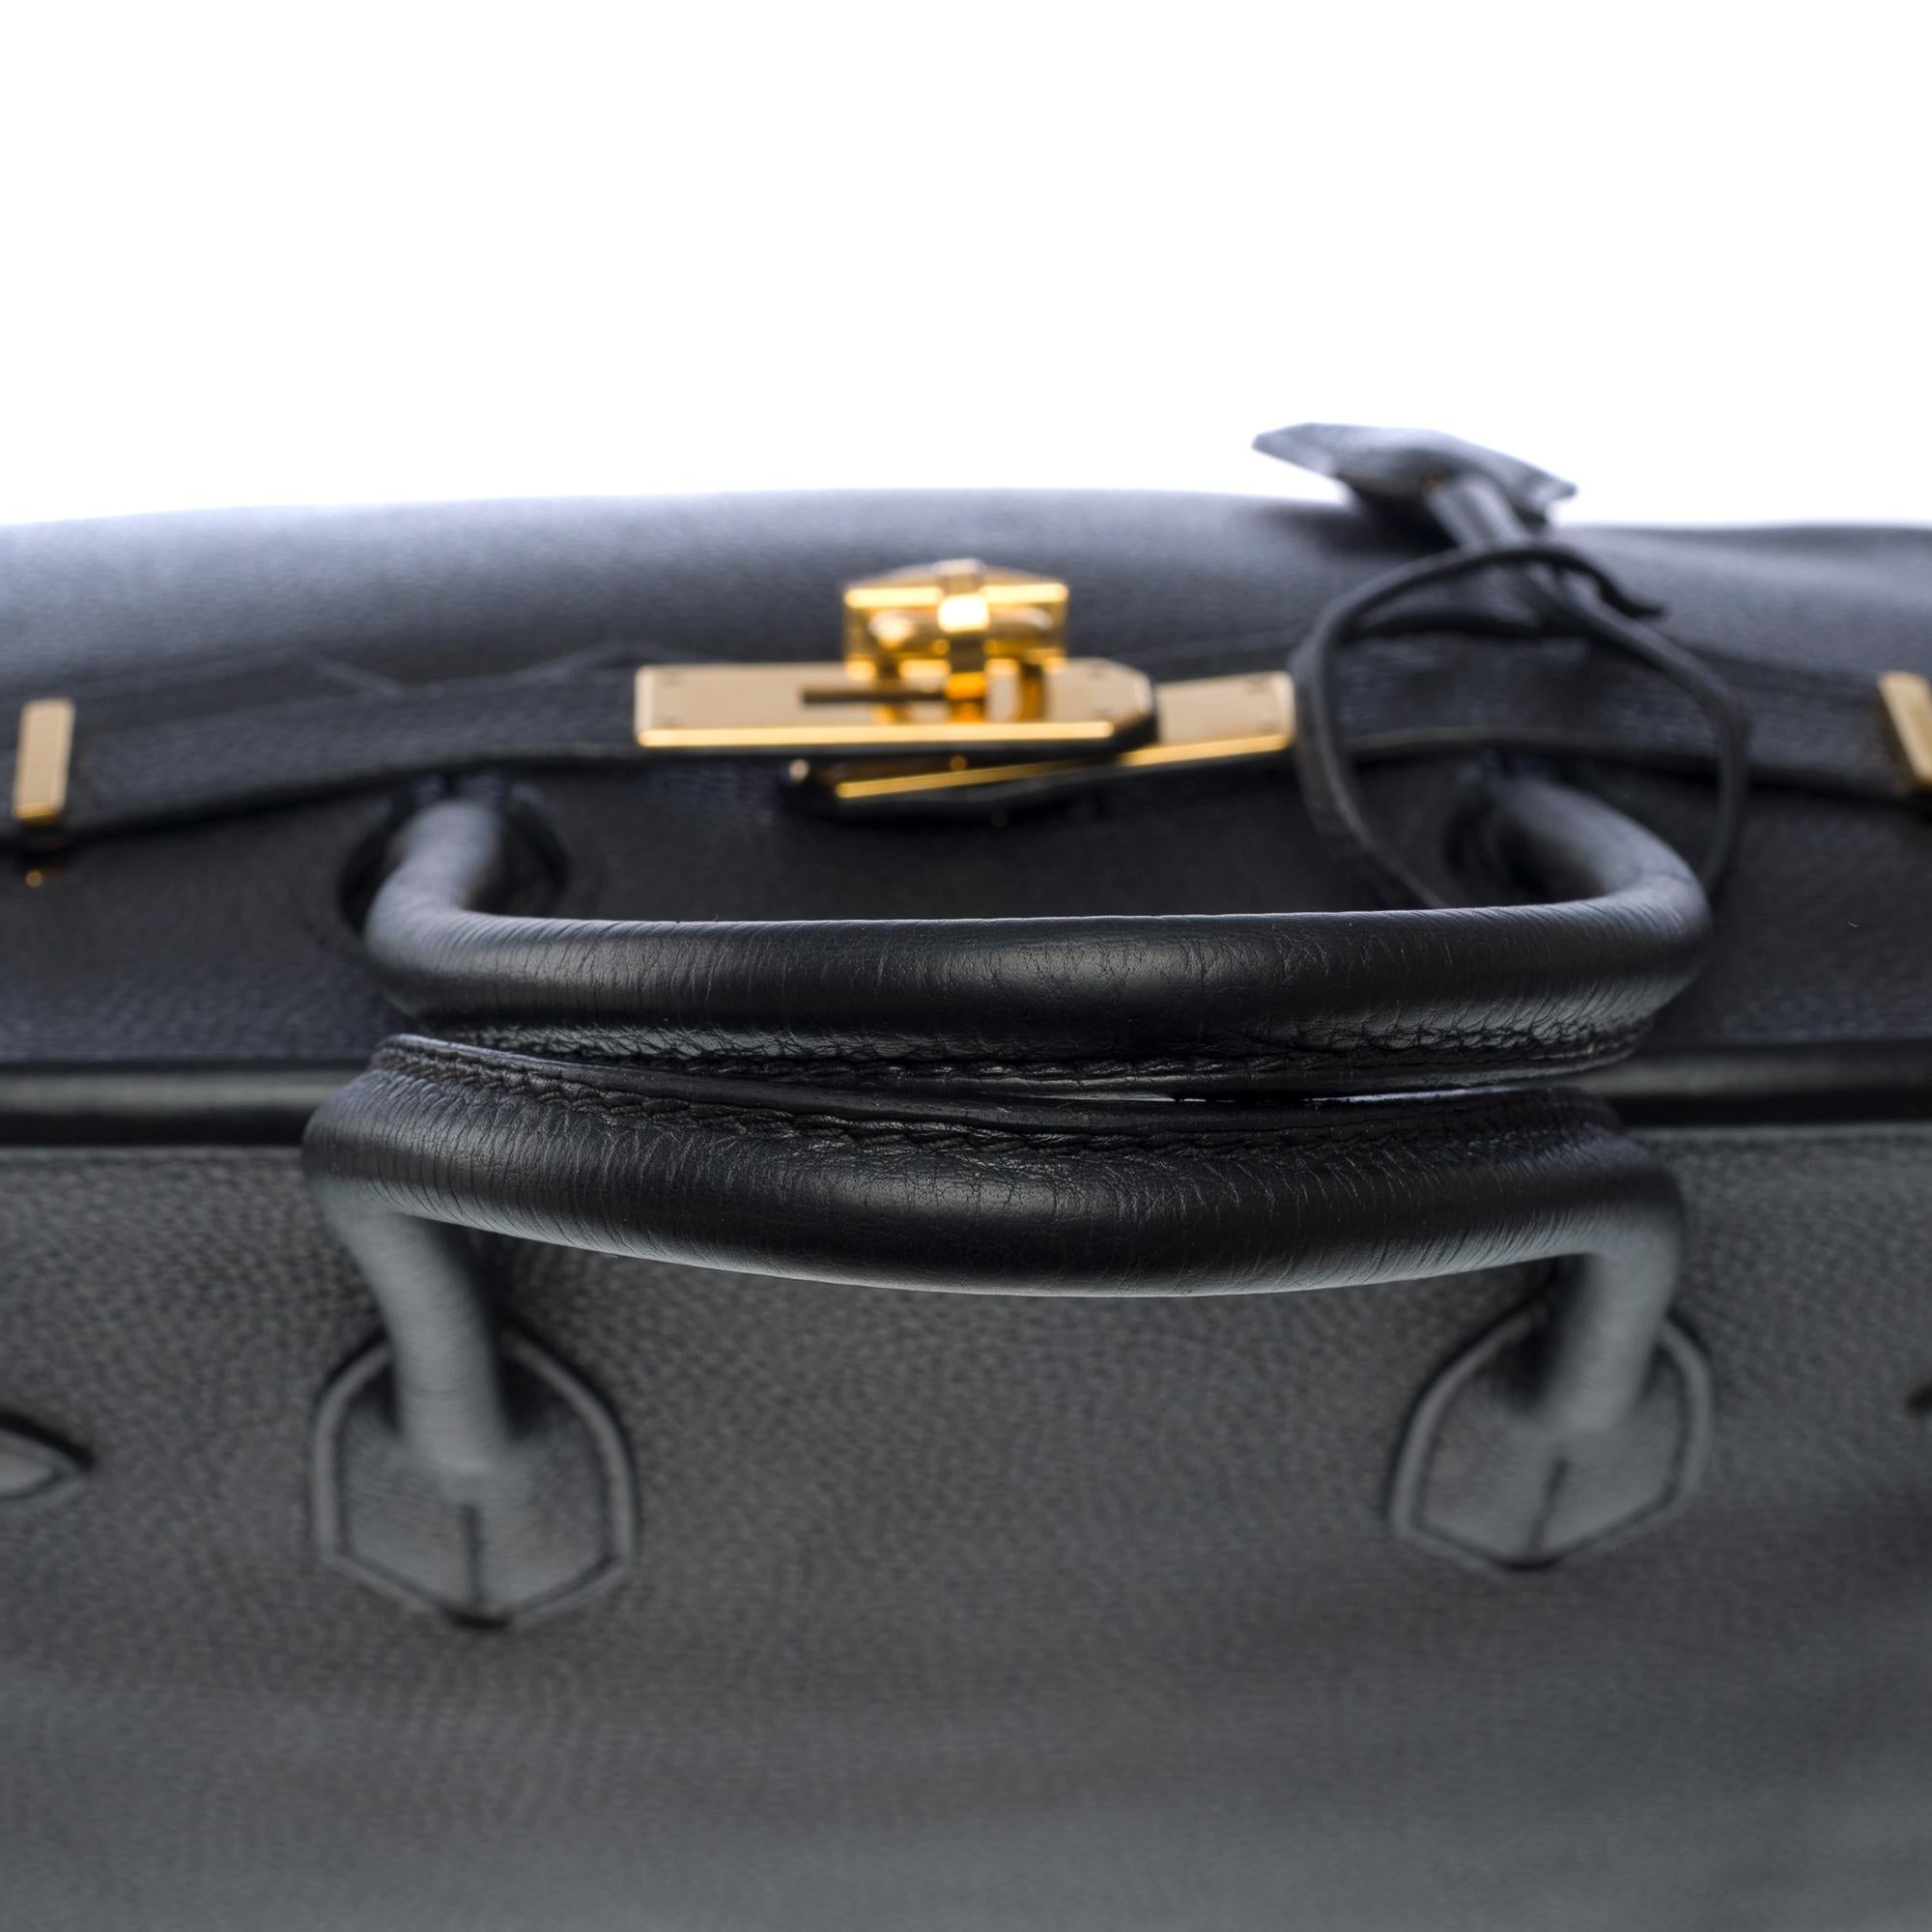 Stunning Hermes Birkin 30 handbag in Black Togo leather, GHW 7